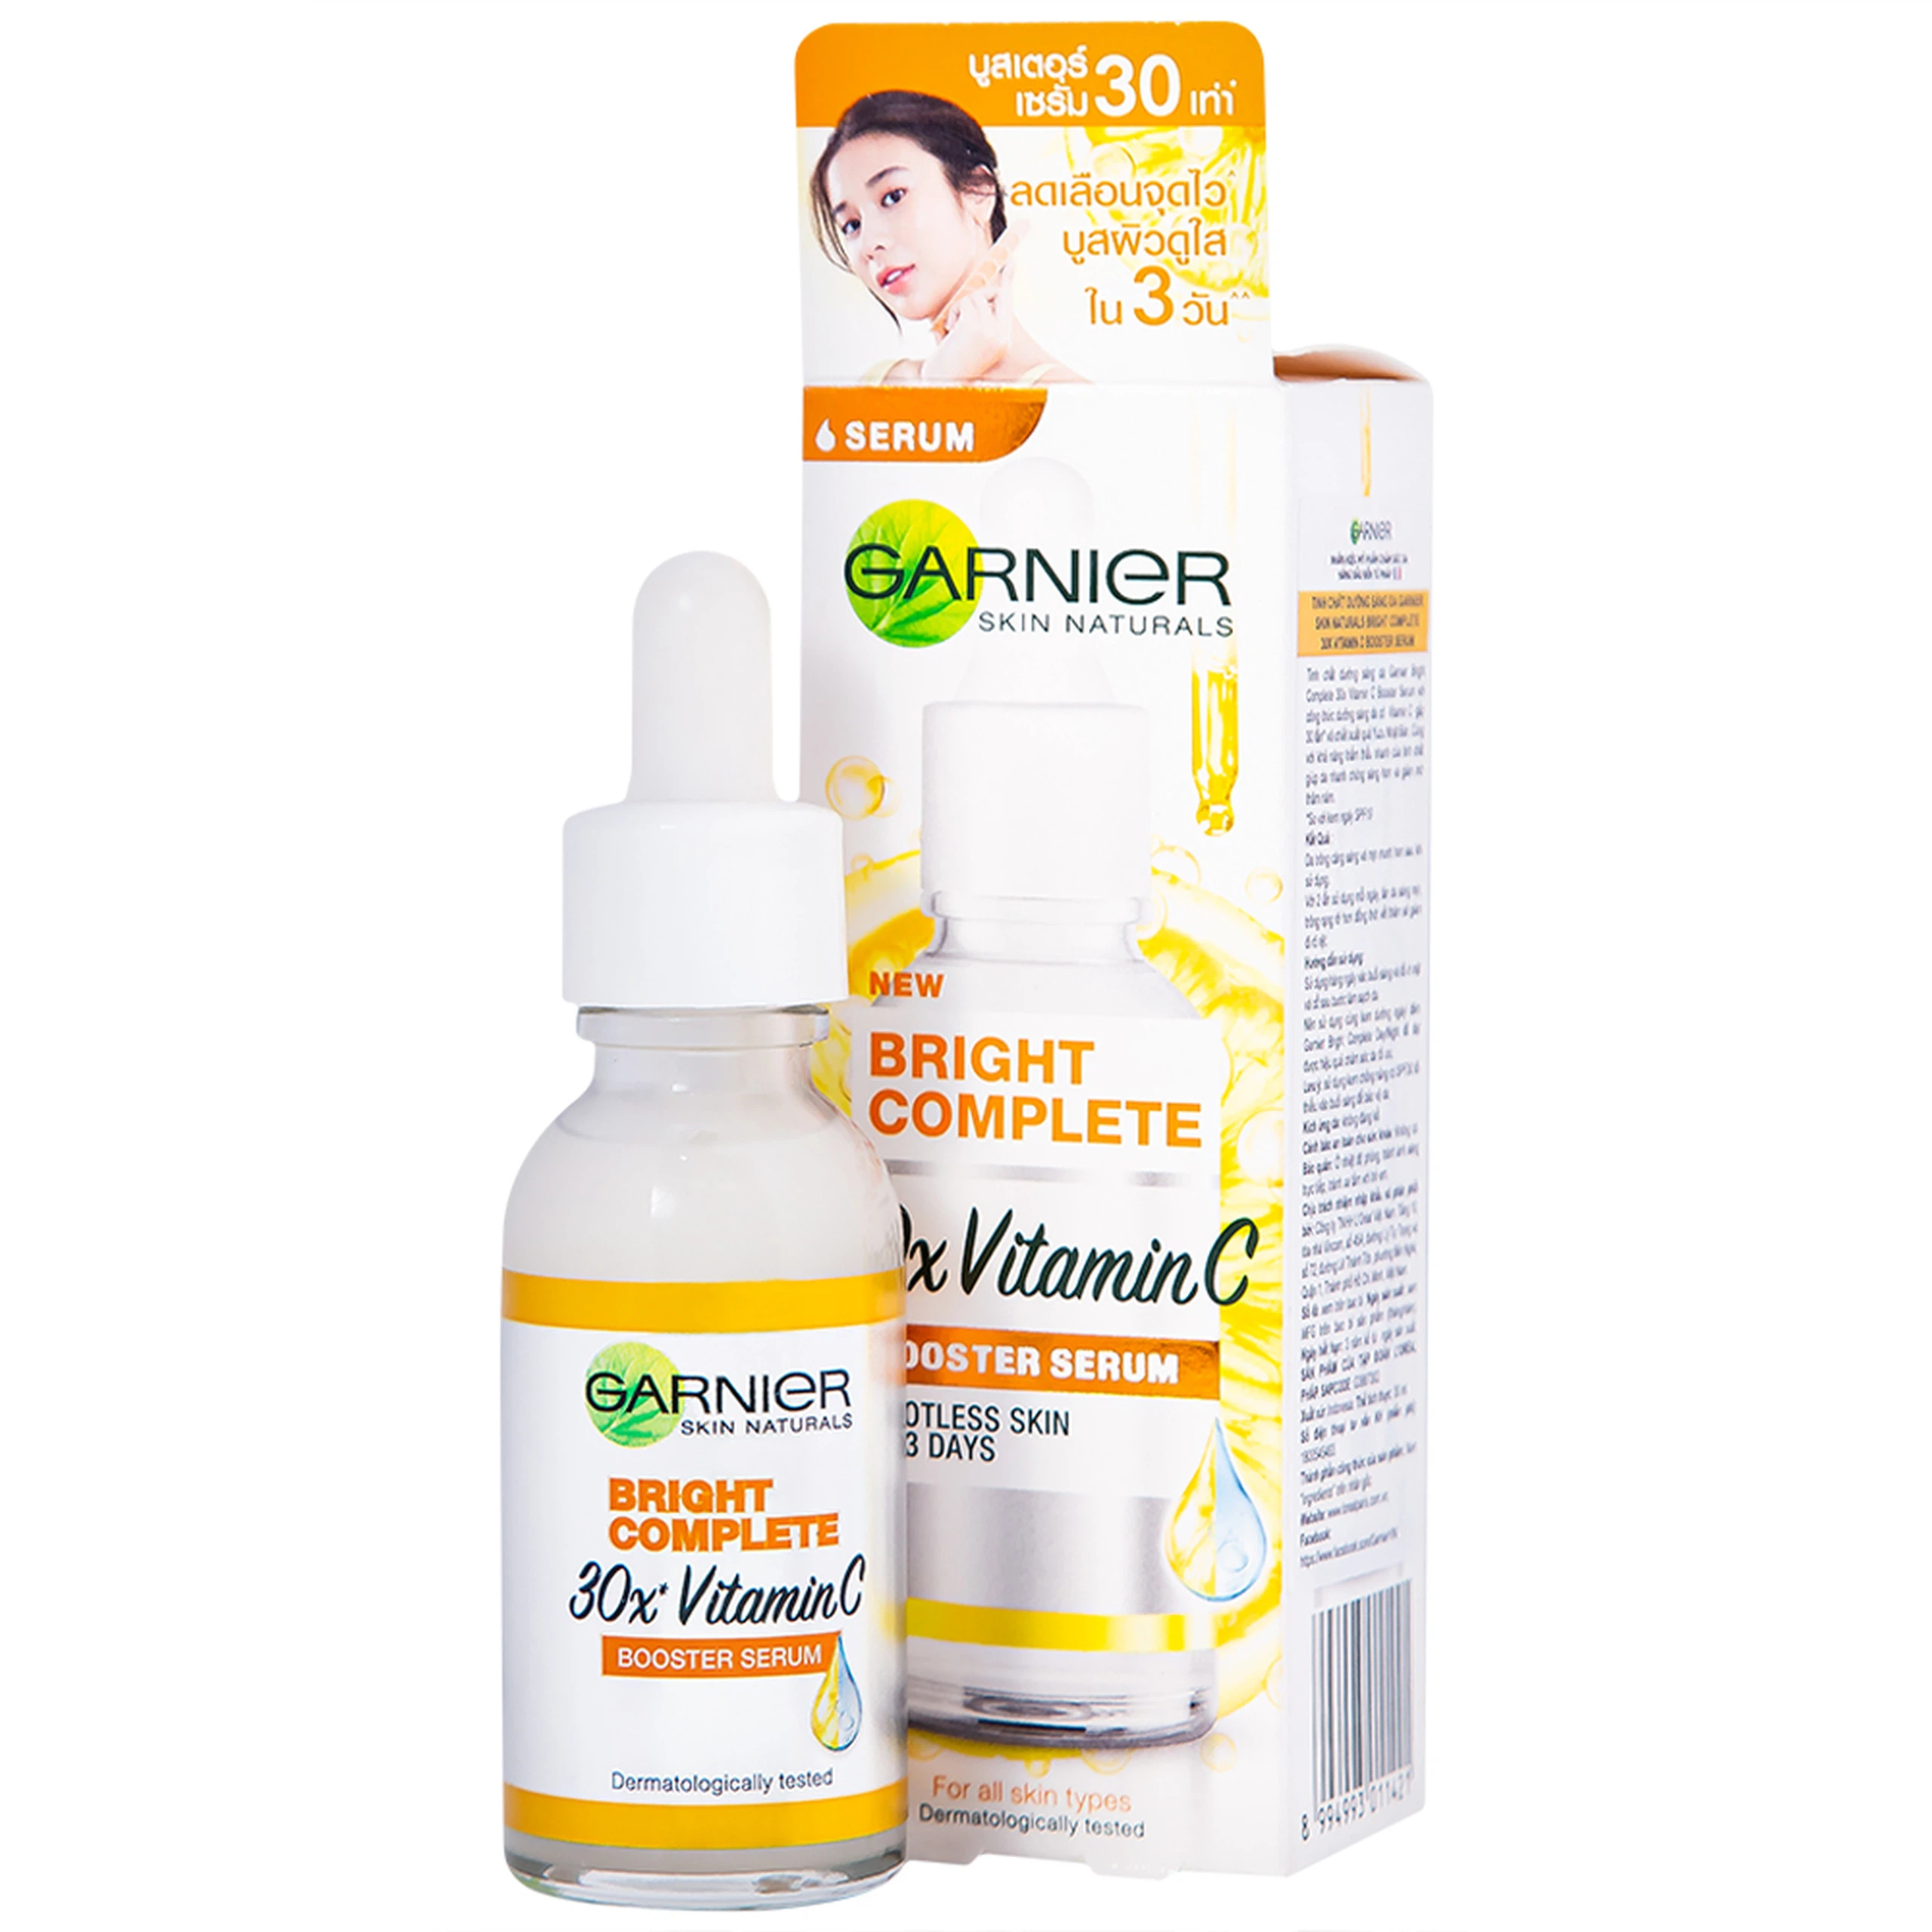 Tinh chất dưỡng sáng da Garnier Skin Naturals Bright Complete 30x Vitamin C Booster Serum (30ml)